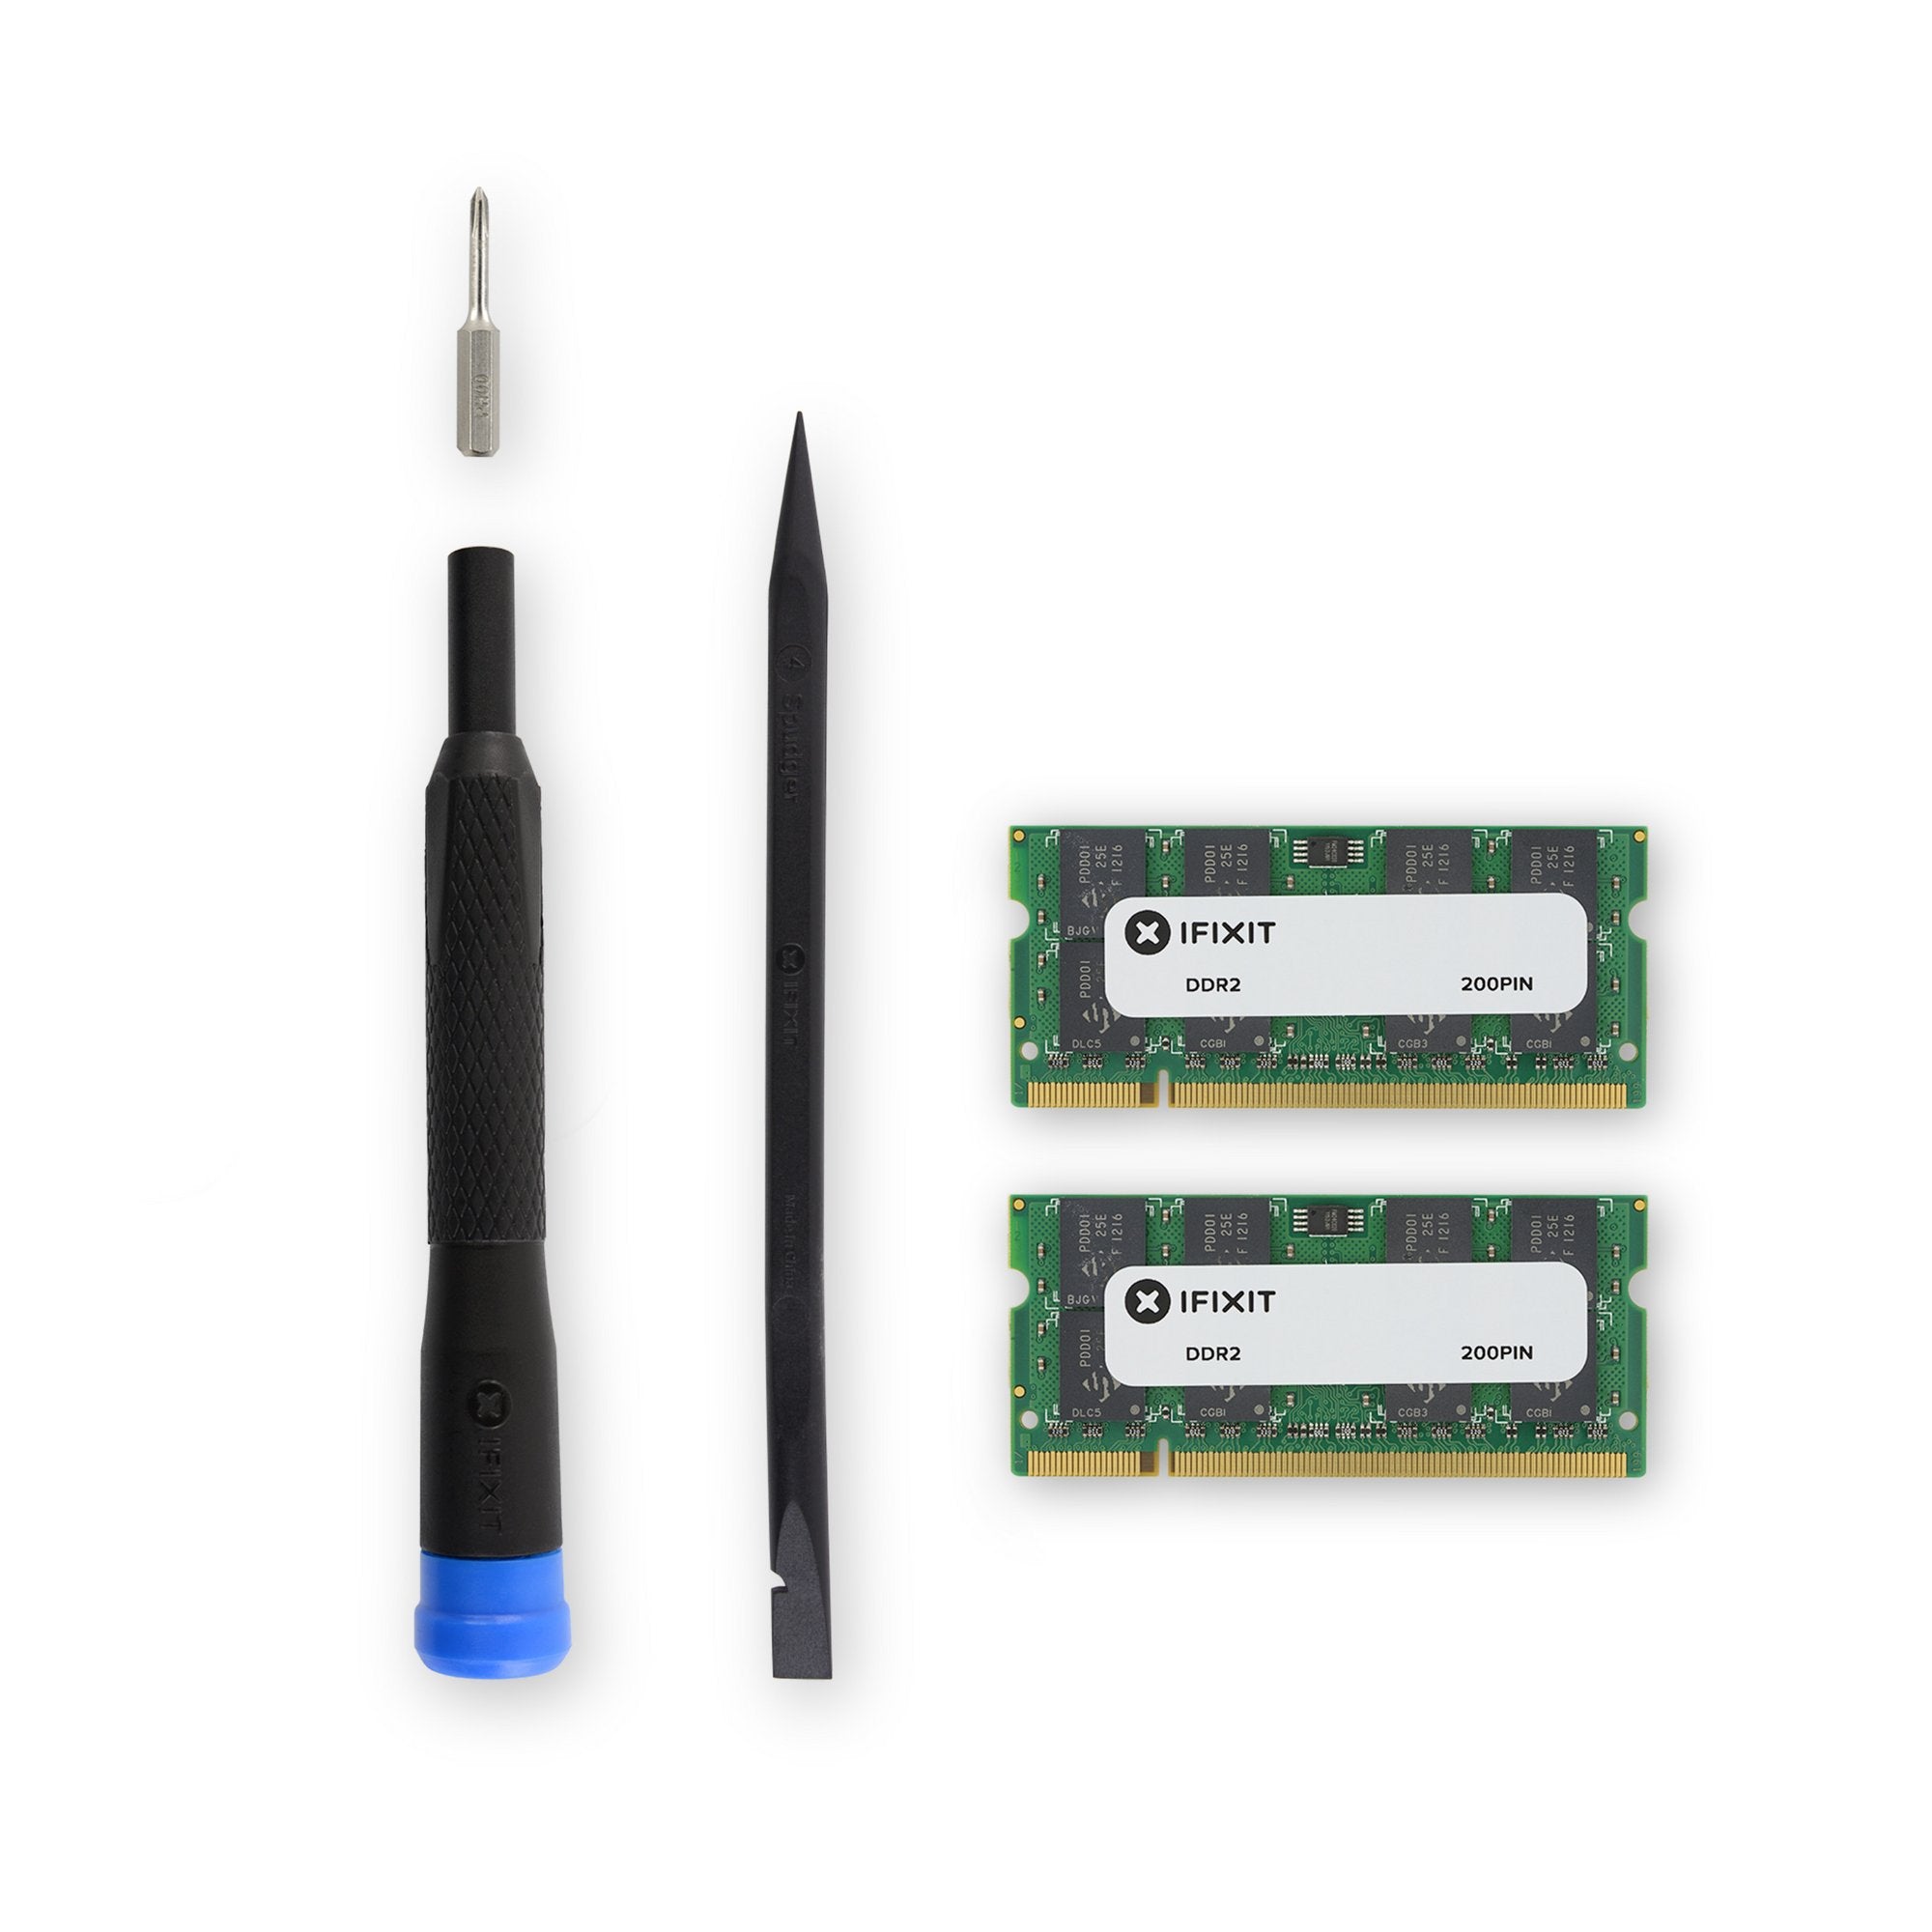 MacBook Pro 15" Model A1211 Memory Maxxer RAM Upgrade Kit